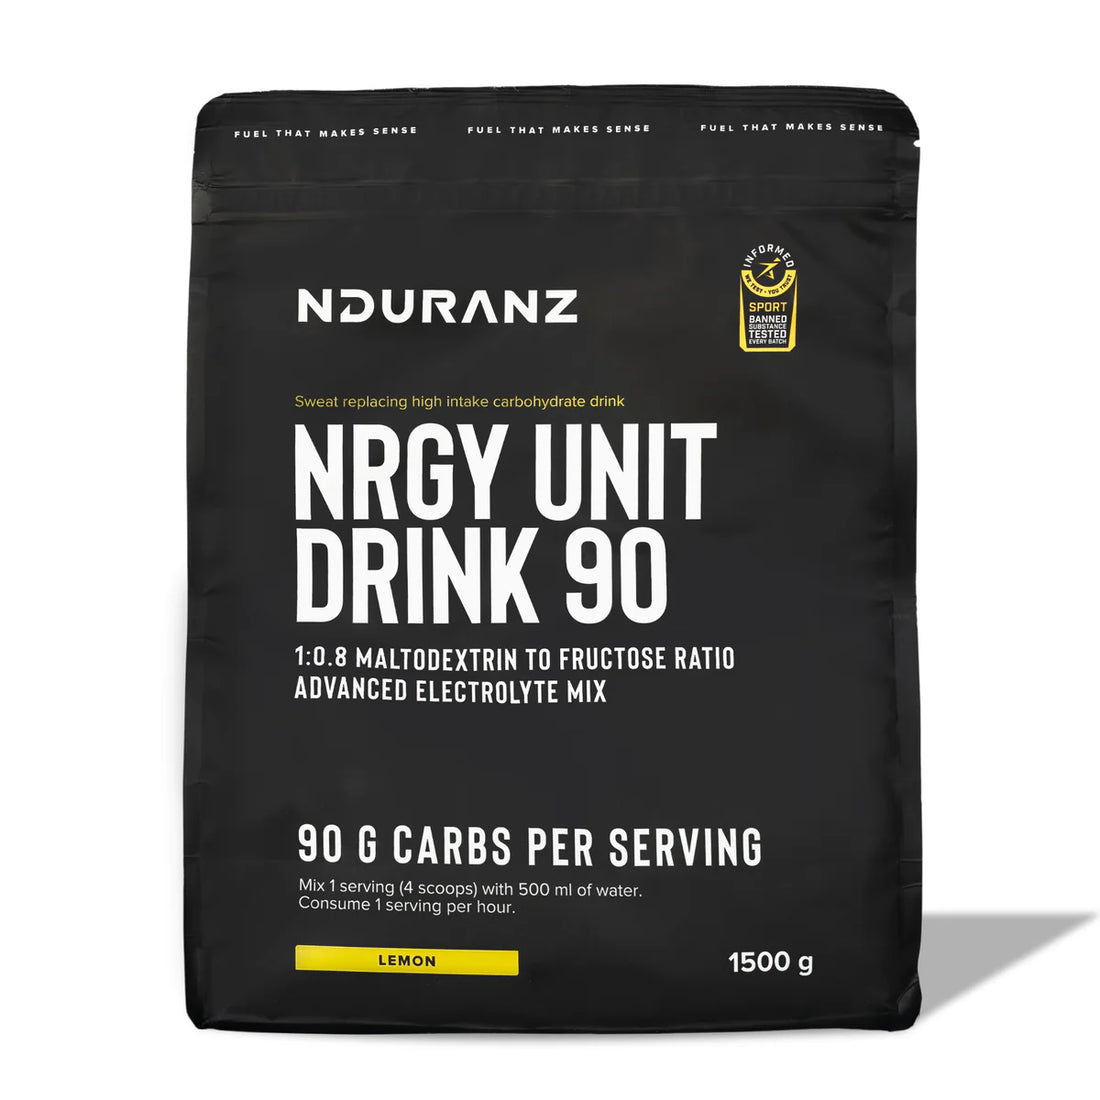 Nduranz Nrgy Unit Drink 90 - 1500g